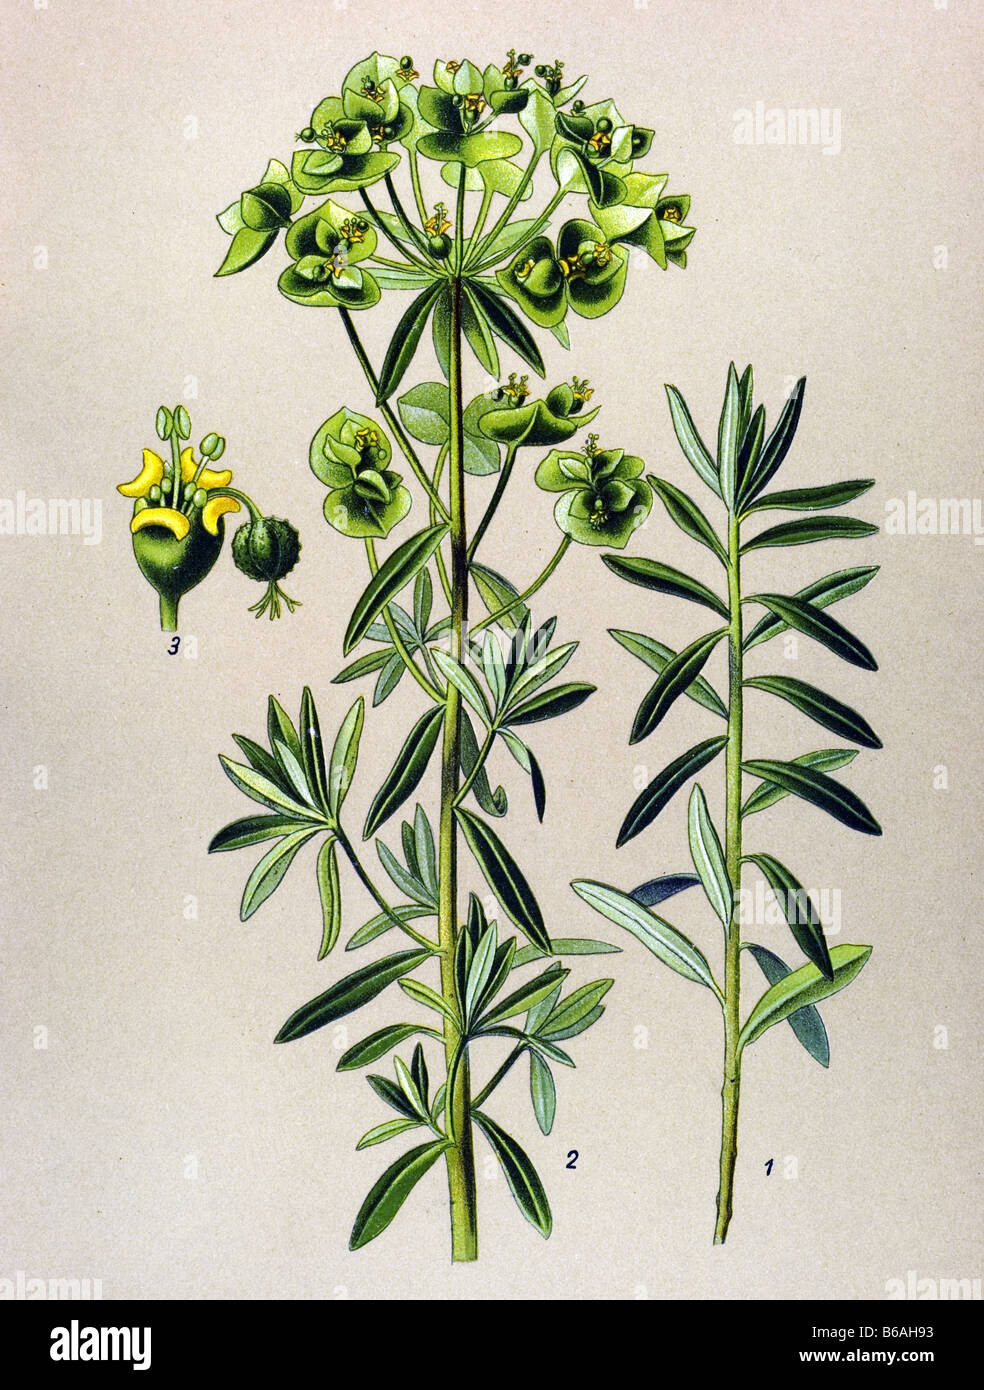 Petty Spurge, Euphorbia Peplus, poisonous plants illustrations Stock Photo